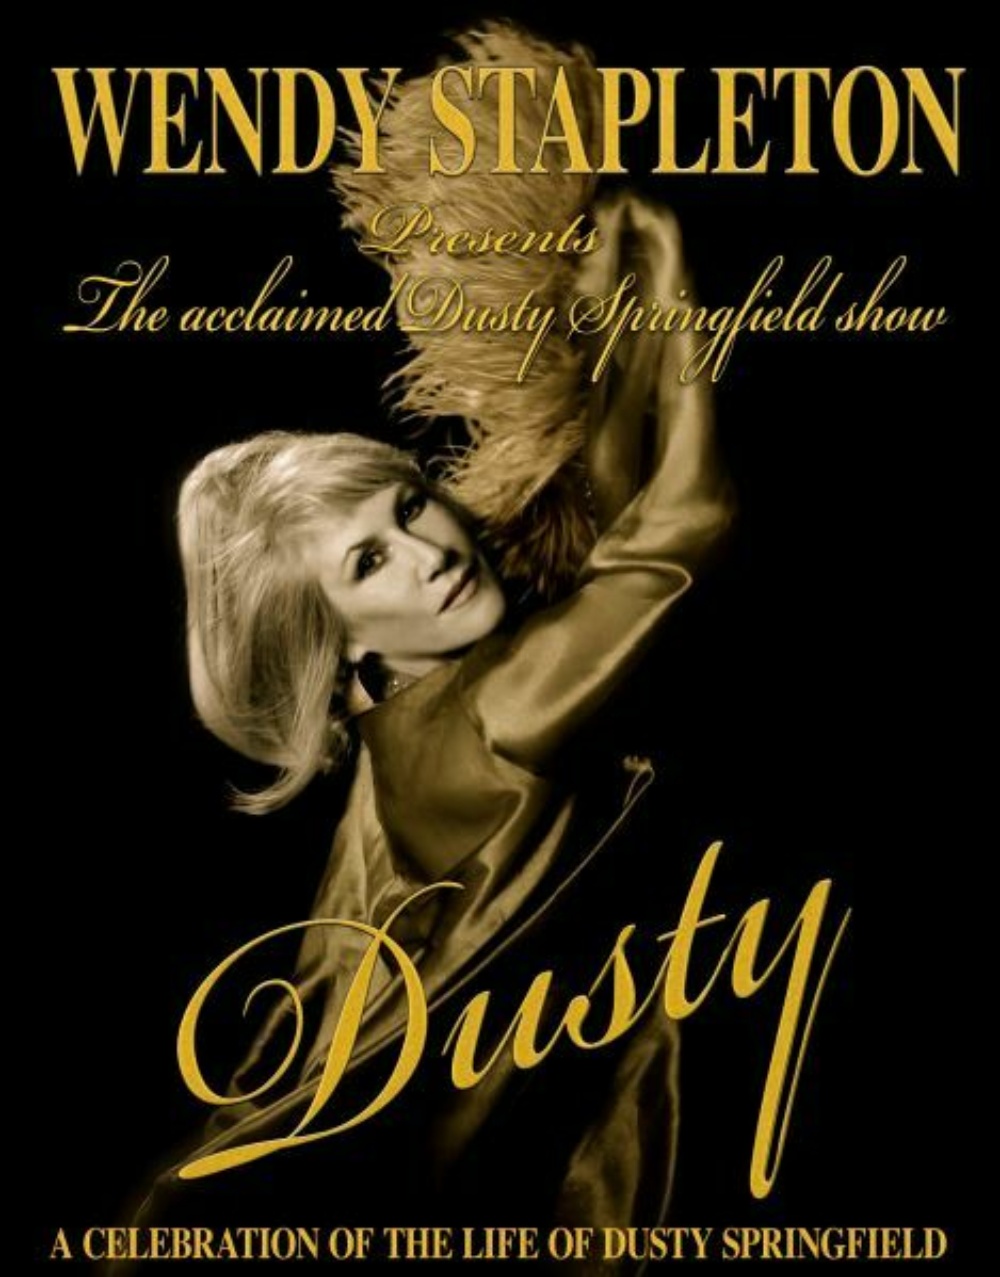 Wendy Stapleton: The Dusty Springfield Story | Dinner & Show